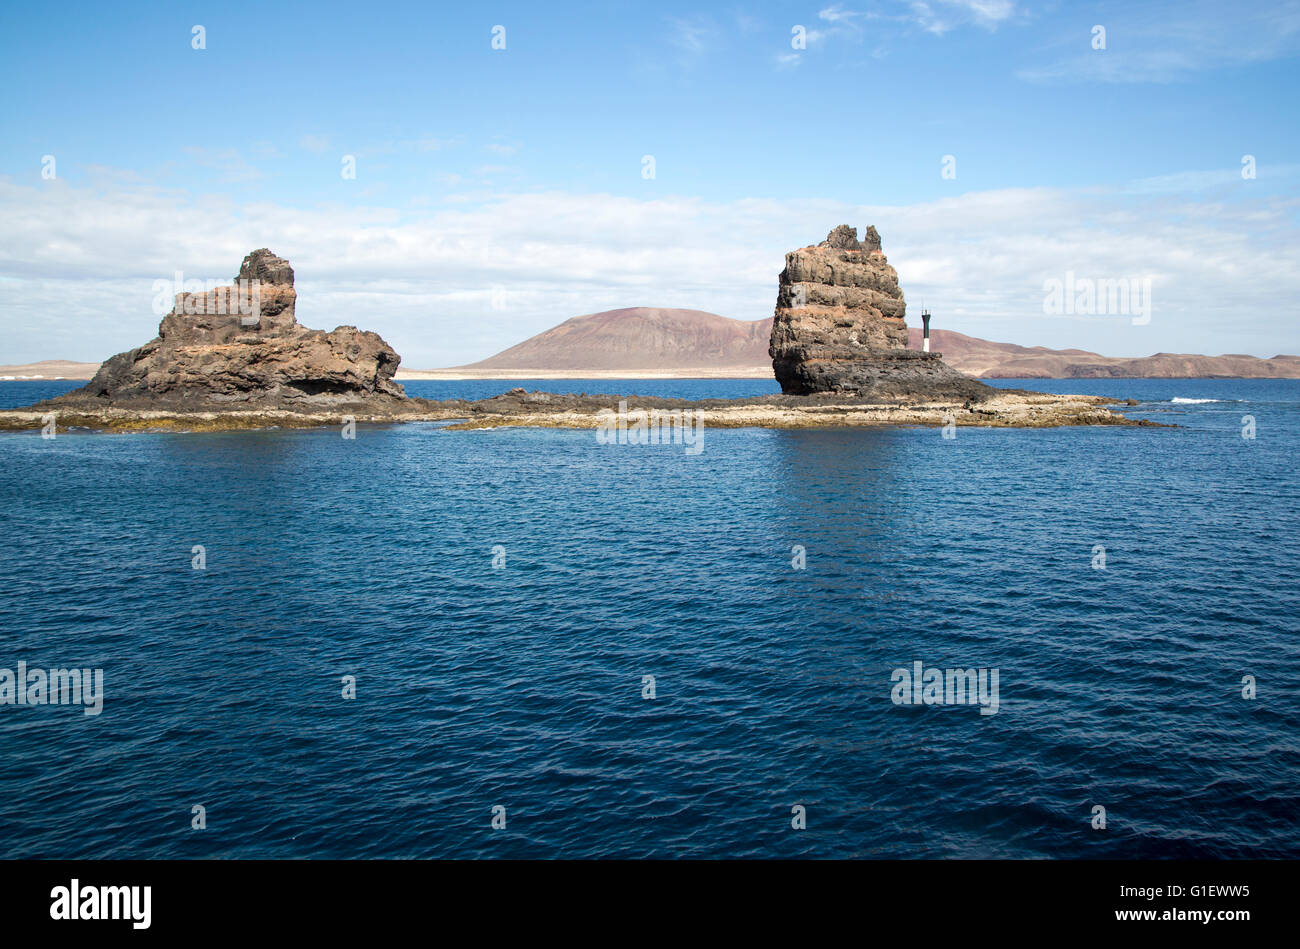 Rocky headland of Punta Fariones, Chinijo Archipelago, Orzola, Lanzarote, Canary Islands, Spain Stock Photo